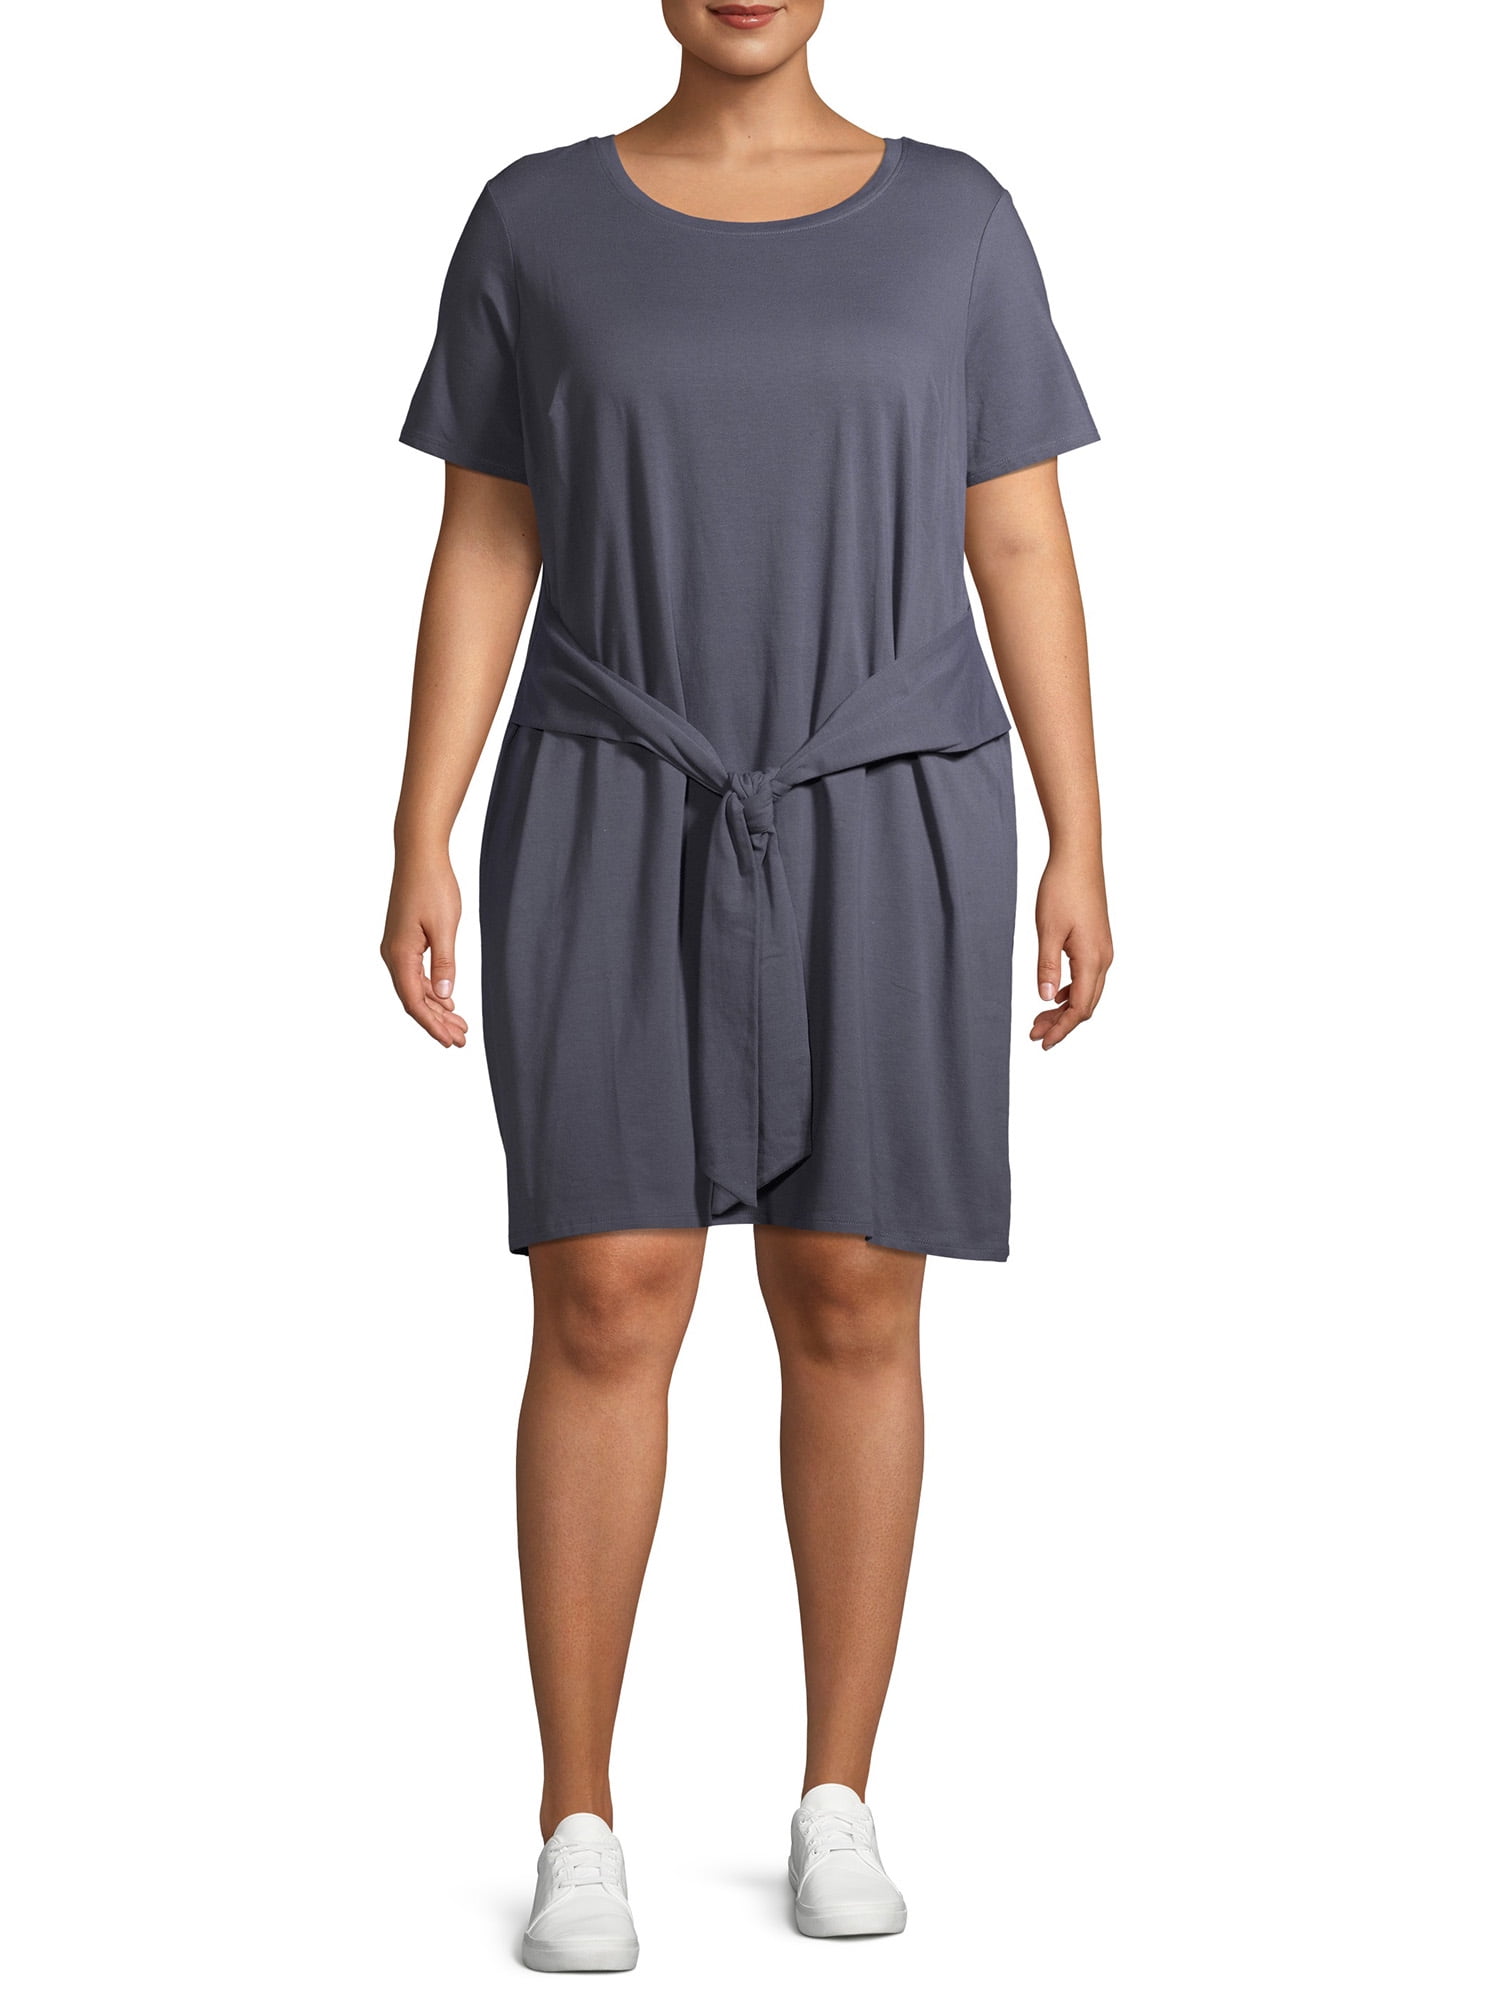 Terra & Sky Women's Plus Size Tie Waist Dress - Walmart.com